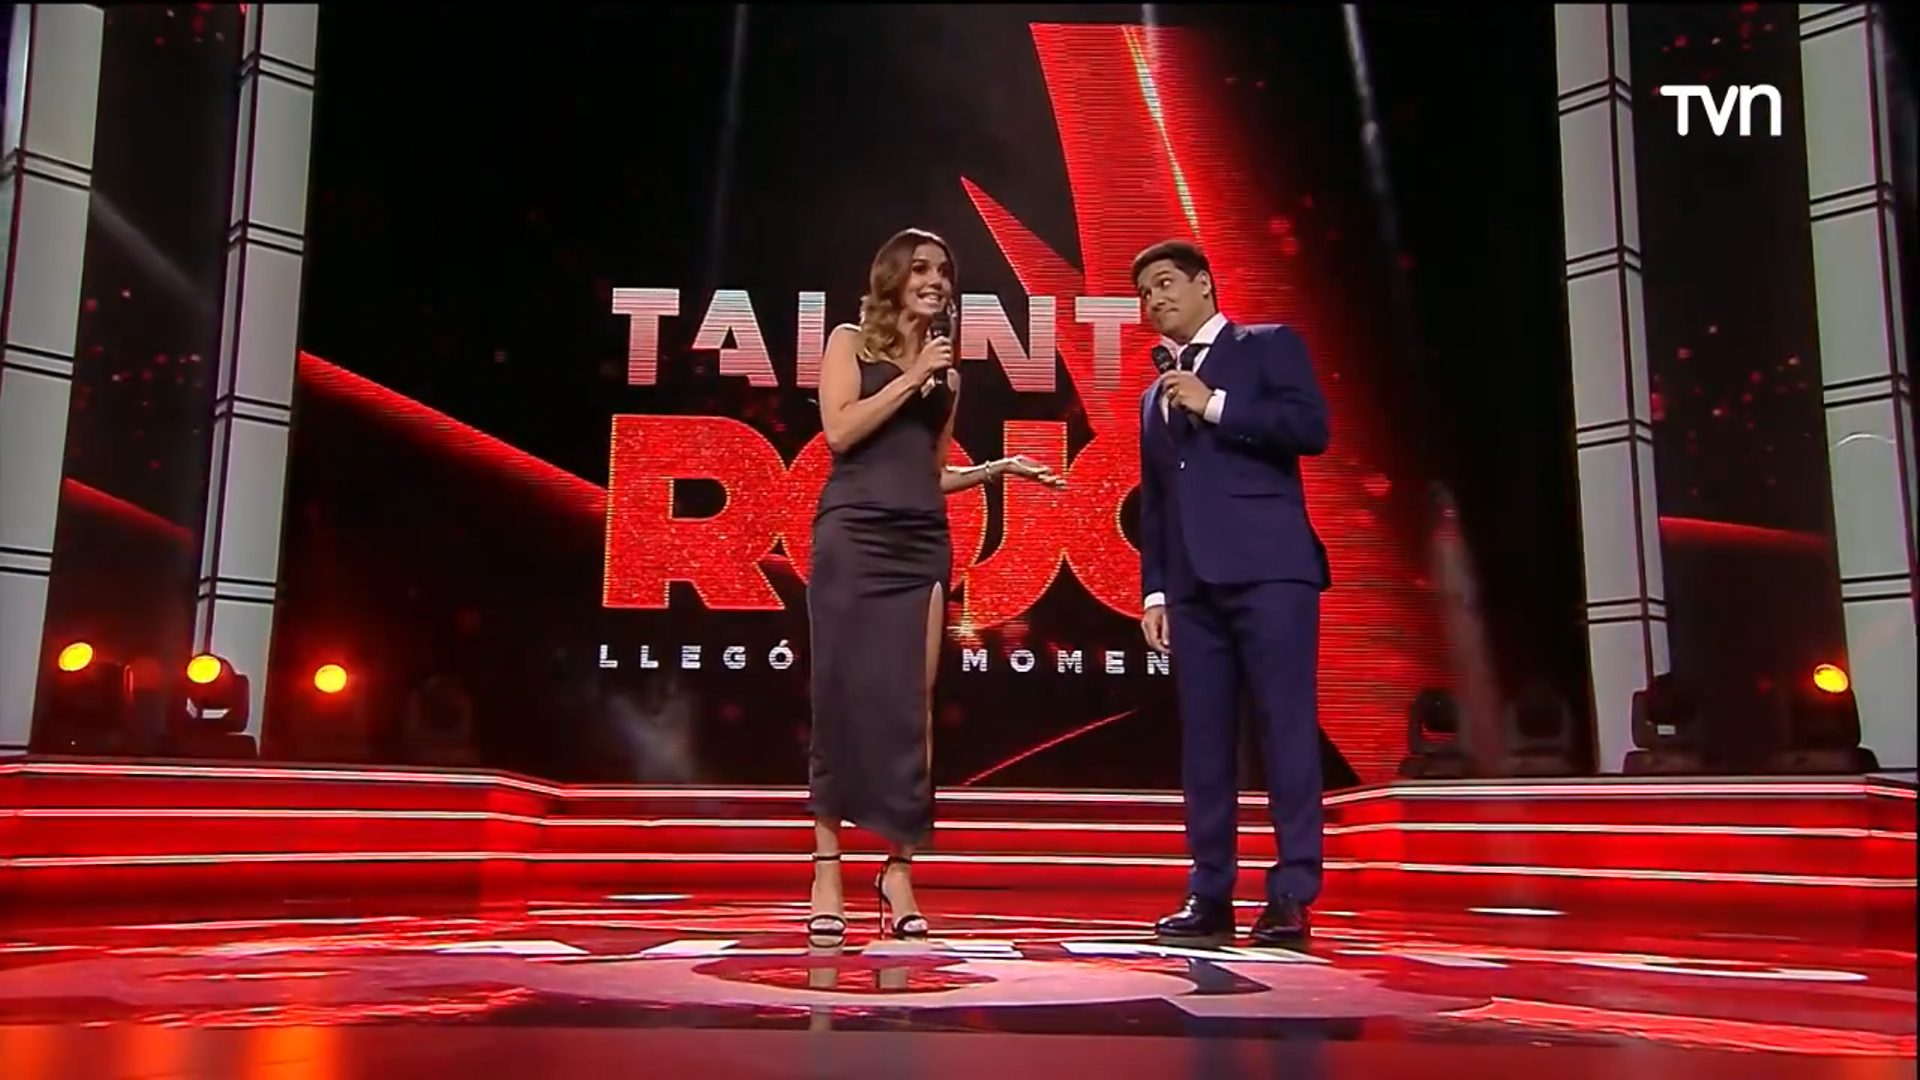 Talento Rojo - TVN